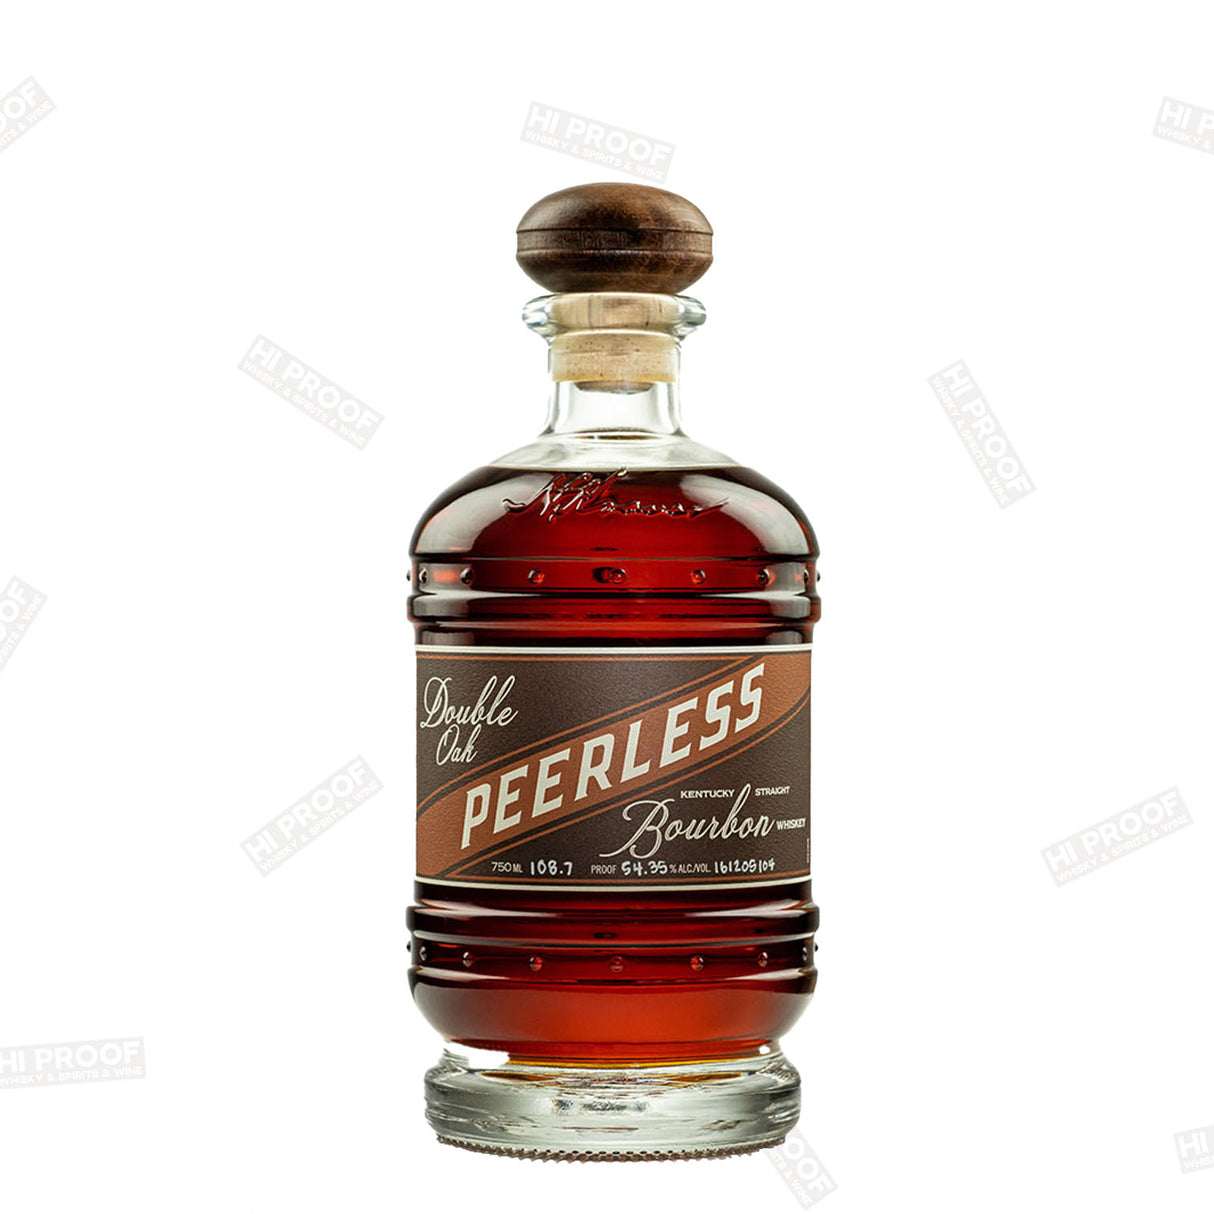 Peerless Double Oak Bourbon 750ML